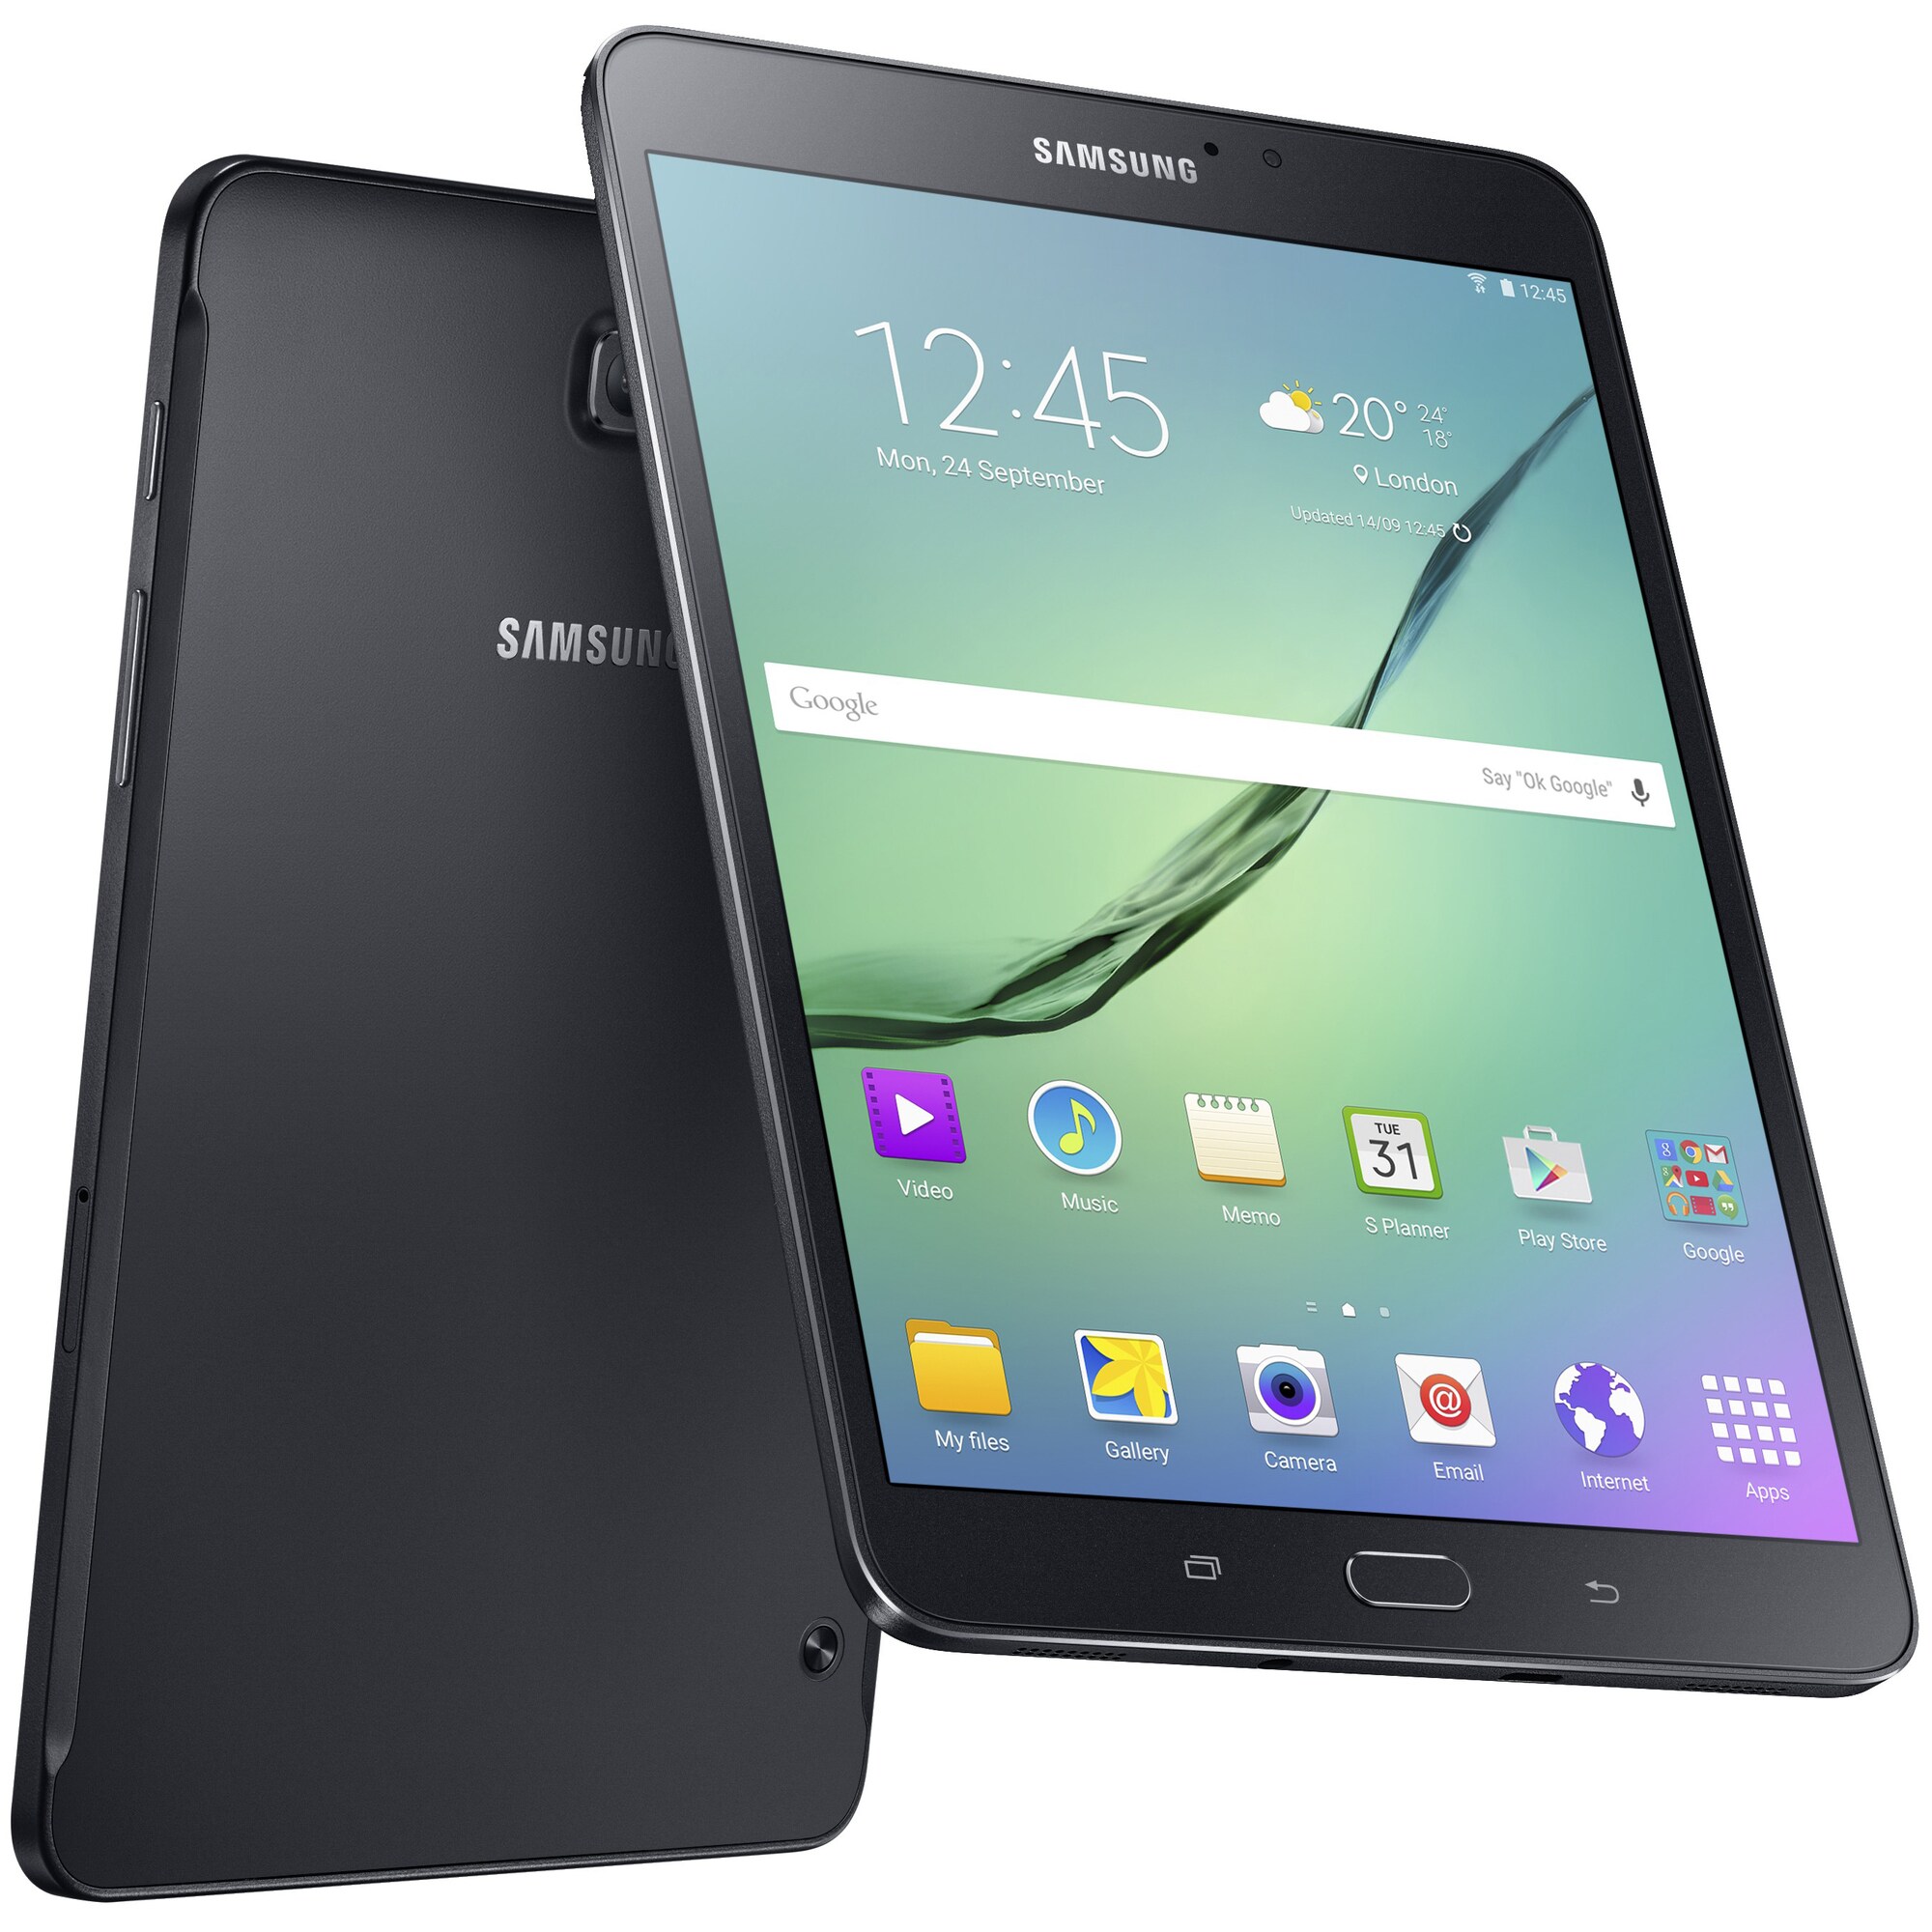 Samsung Galaxy Tab S2 8" 4G 2016 Ed. (svart) - iPad, Surfplatta ...